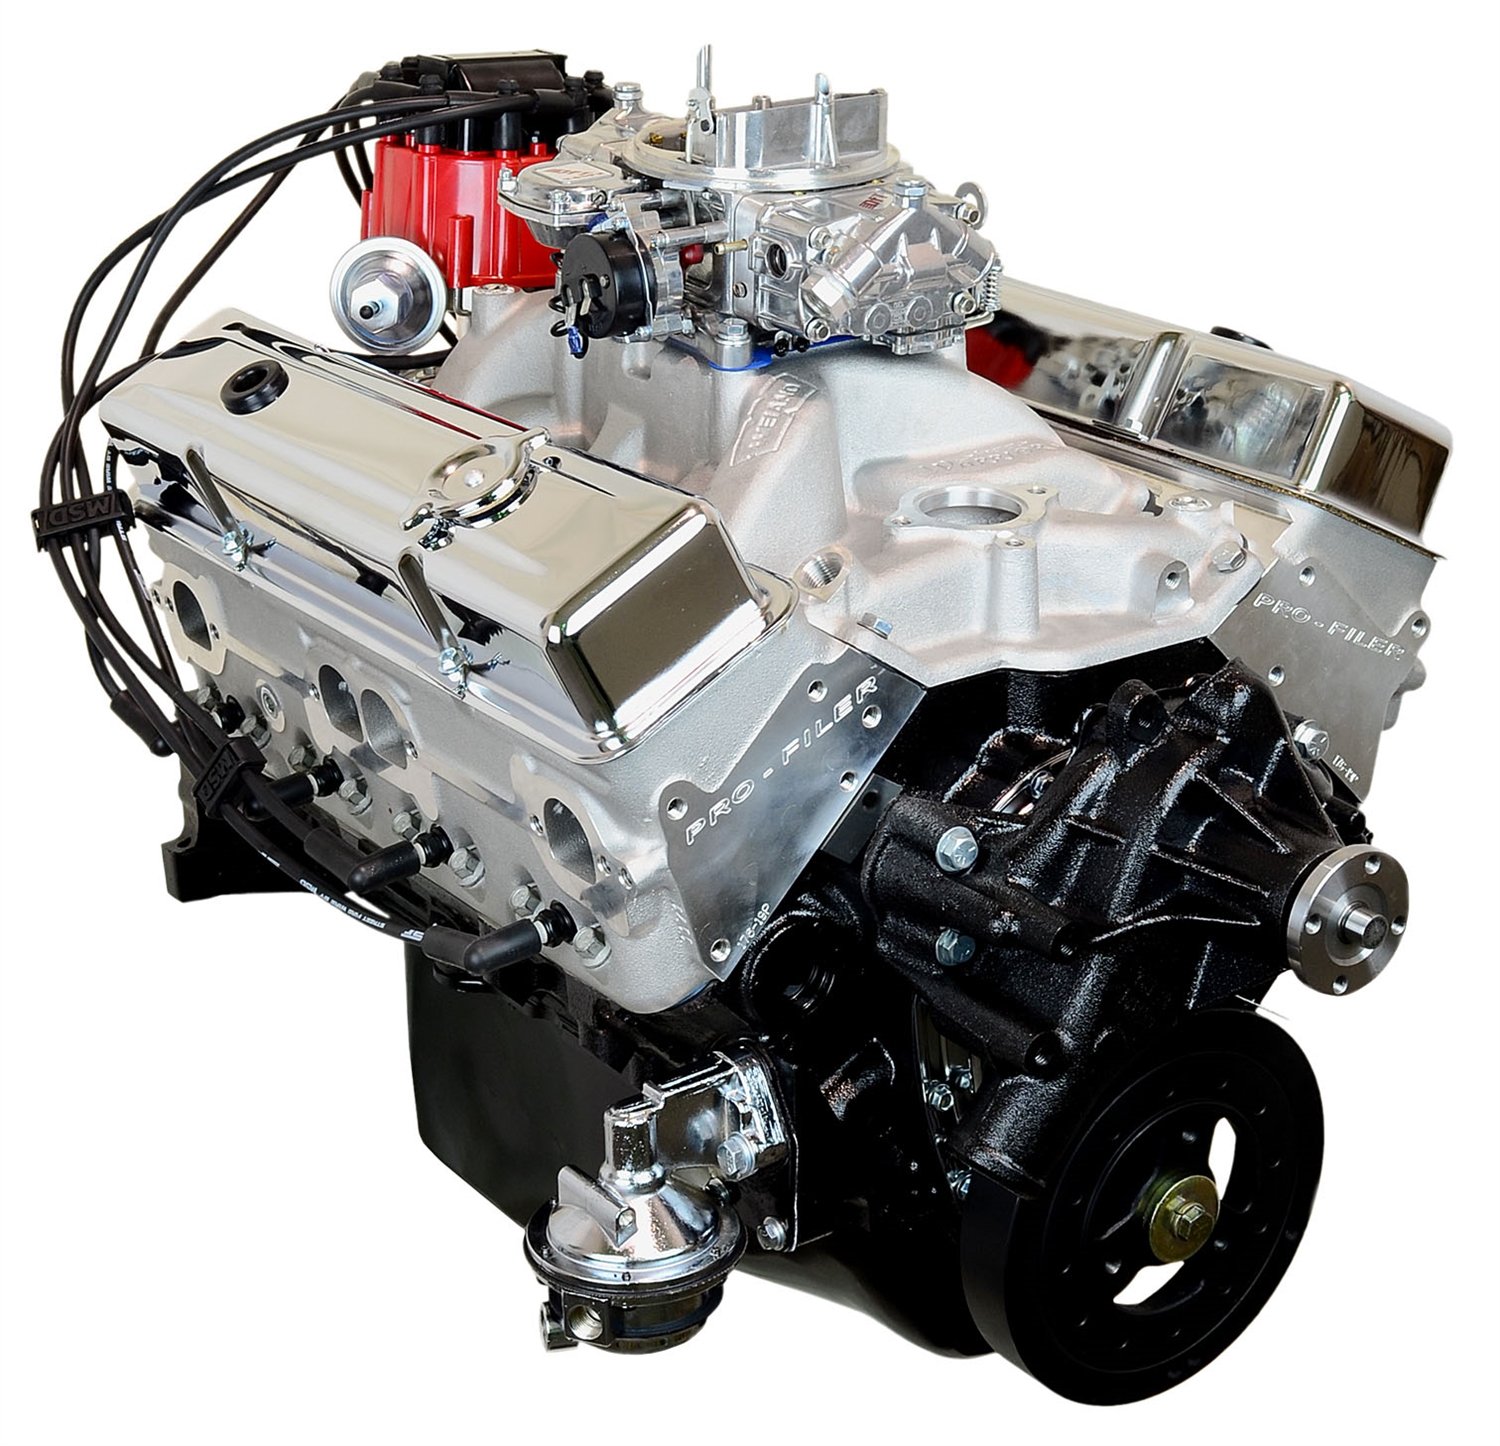 HP89C High Performance Crate Engine Small Block Chevy 350ci / 390HP / 420TQ